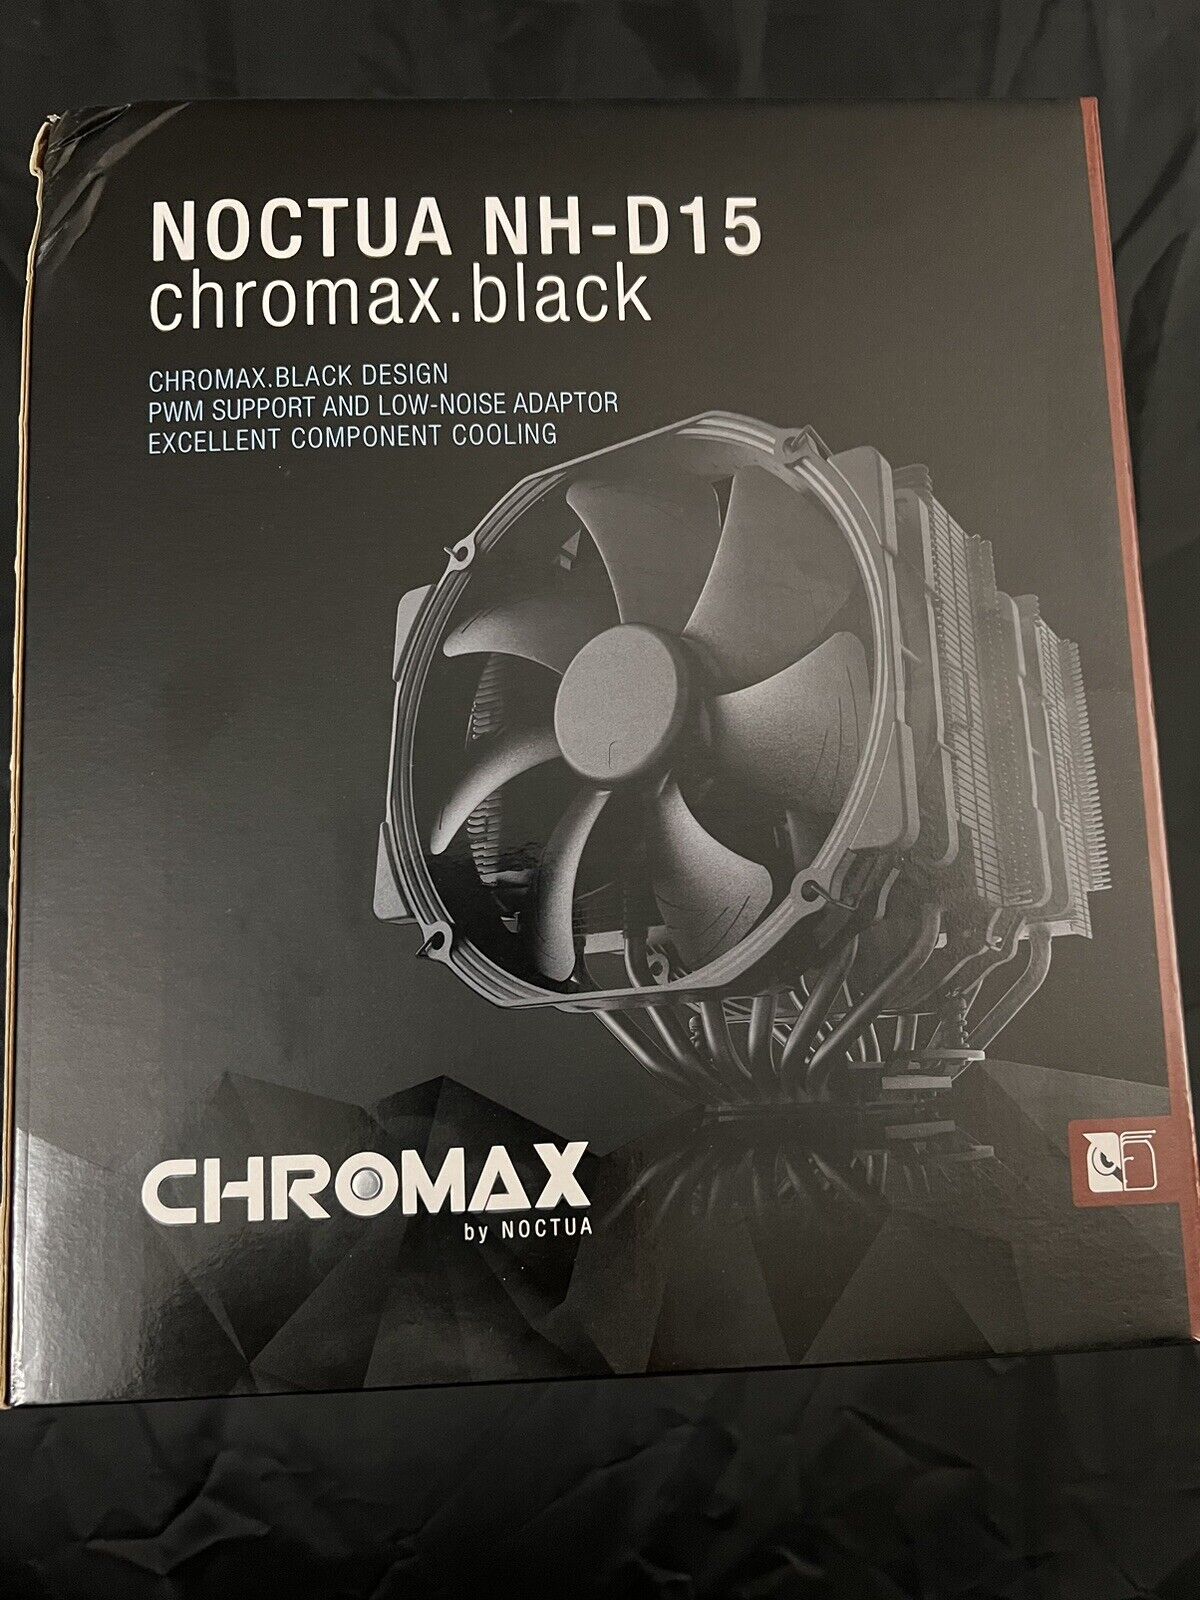 NEW Noctua NH-D15 chromax black High Performance CPU Cooler